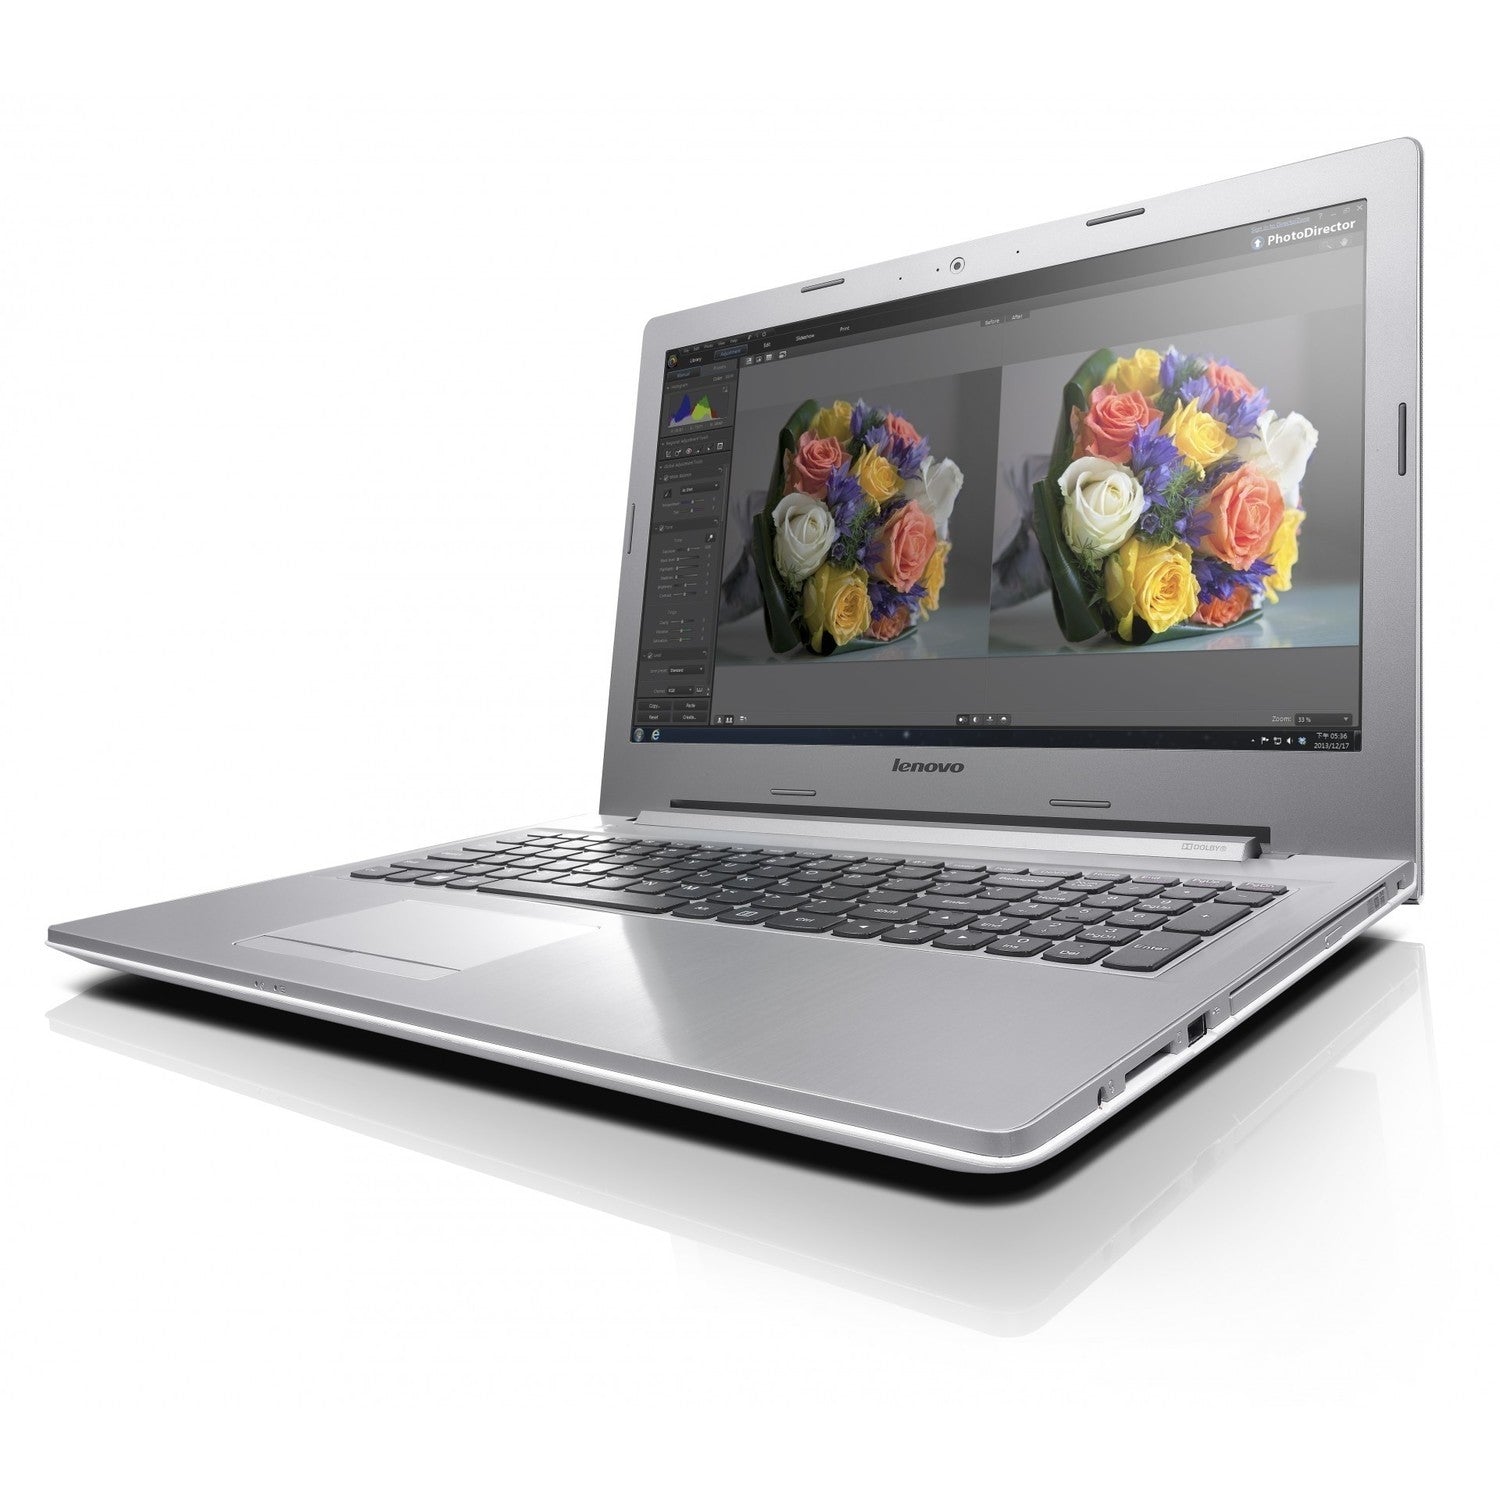 Lenovo Z50-75 80EC00HFUK 15.6" Laptop - AMD A10 8GB RAM 1TB HDD - White